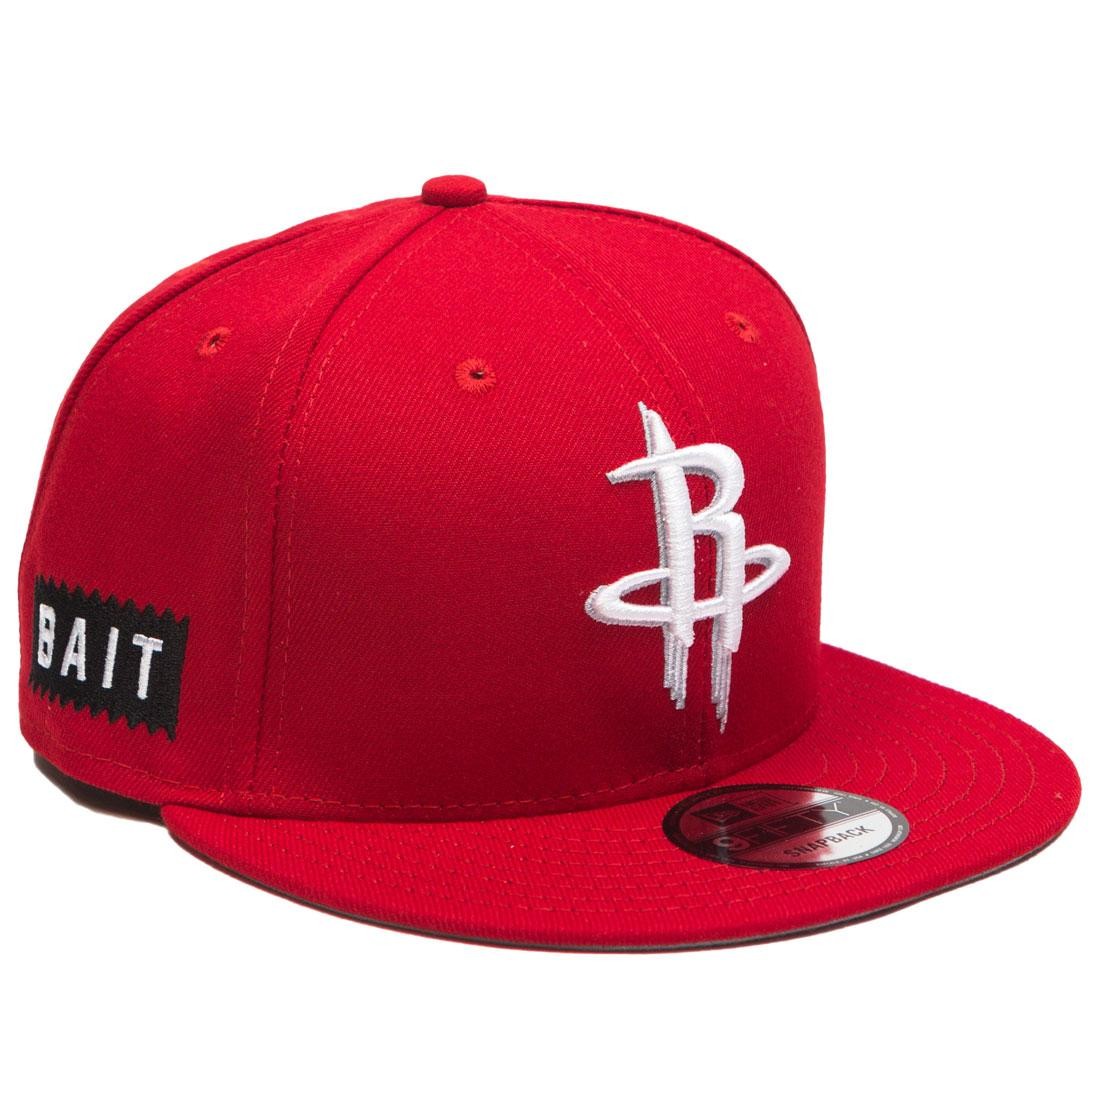 BAIT x NBA X New Era 9Fifty Houston Rockets Scarlet Snapback Cap (red)